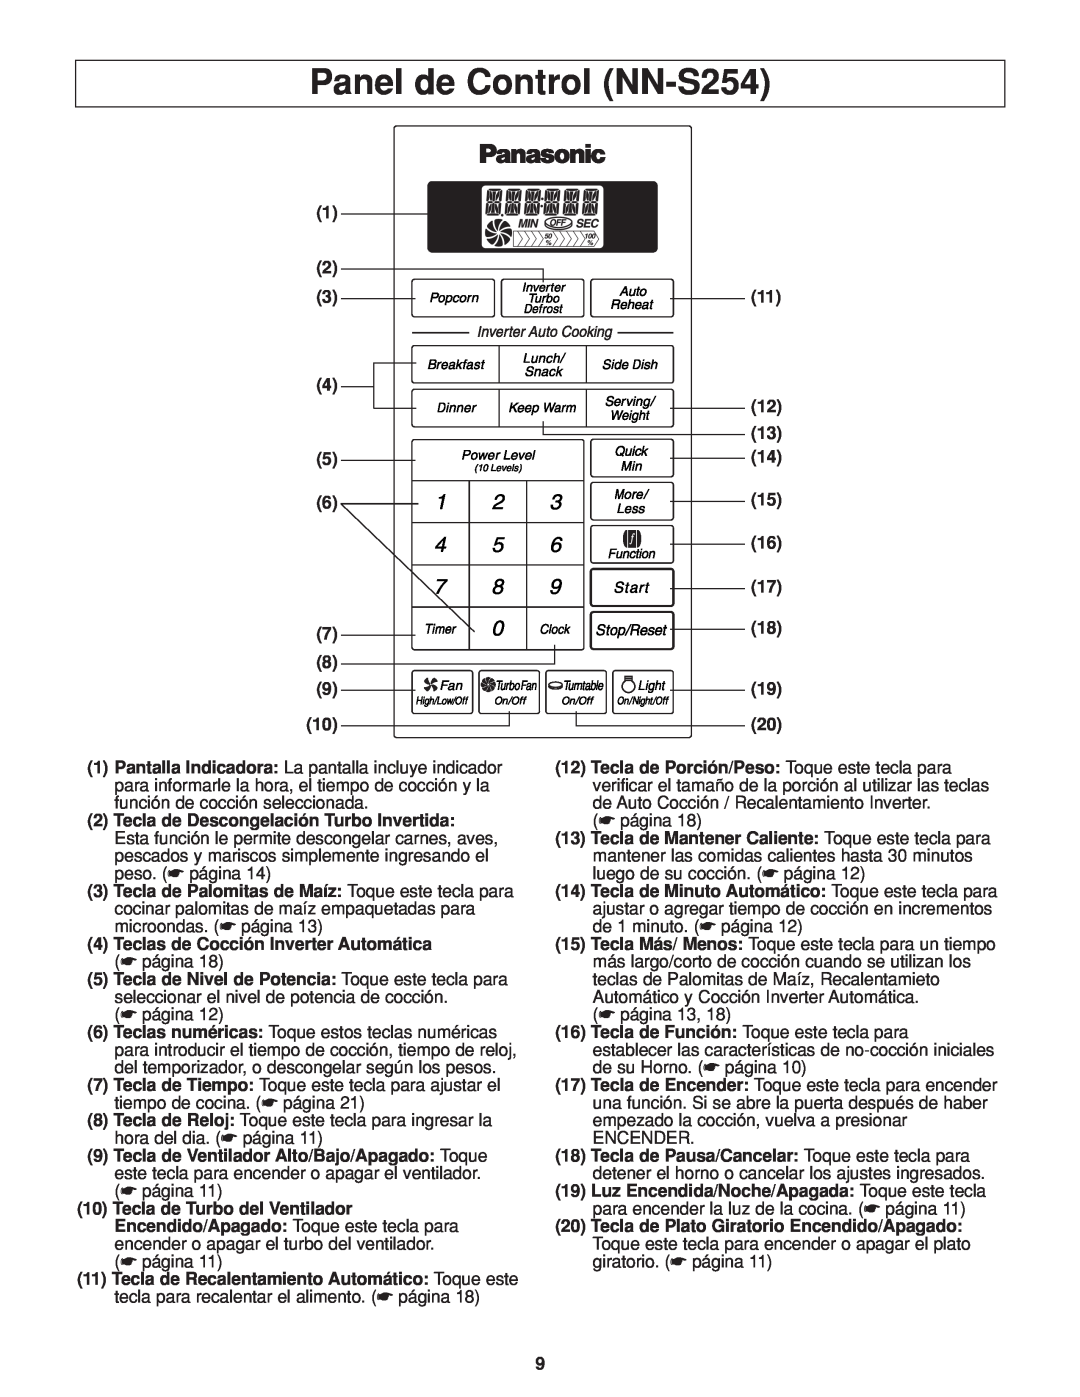 Panasonic NN-H264 important safety instructions Panel de Control NN-S254 